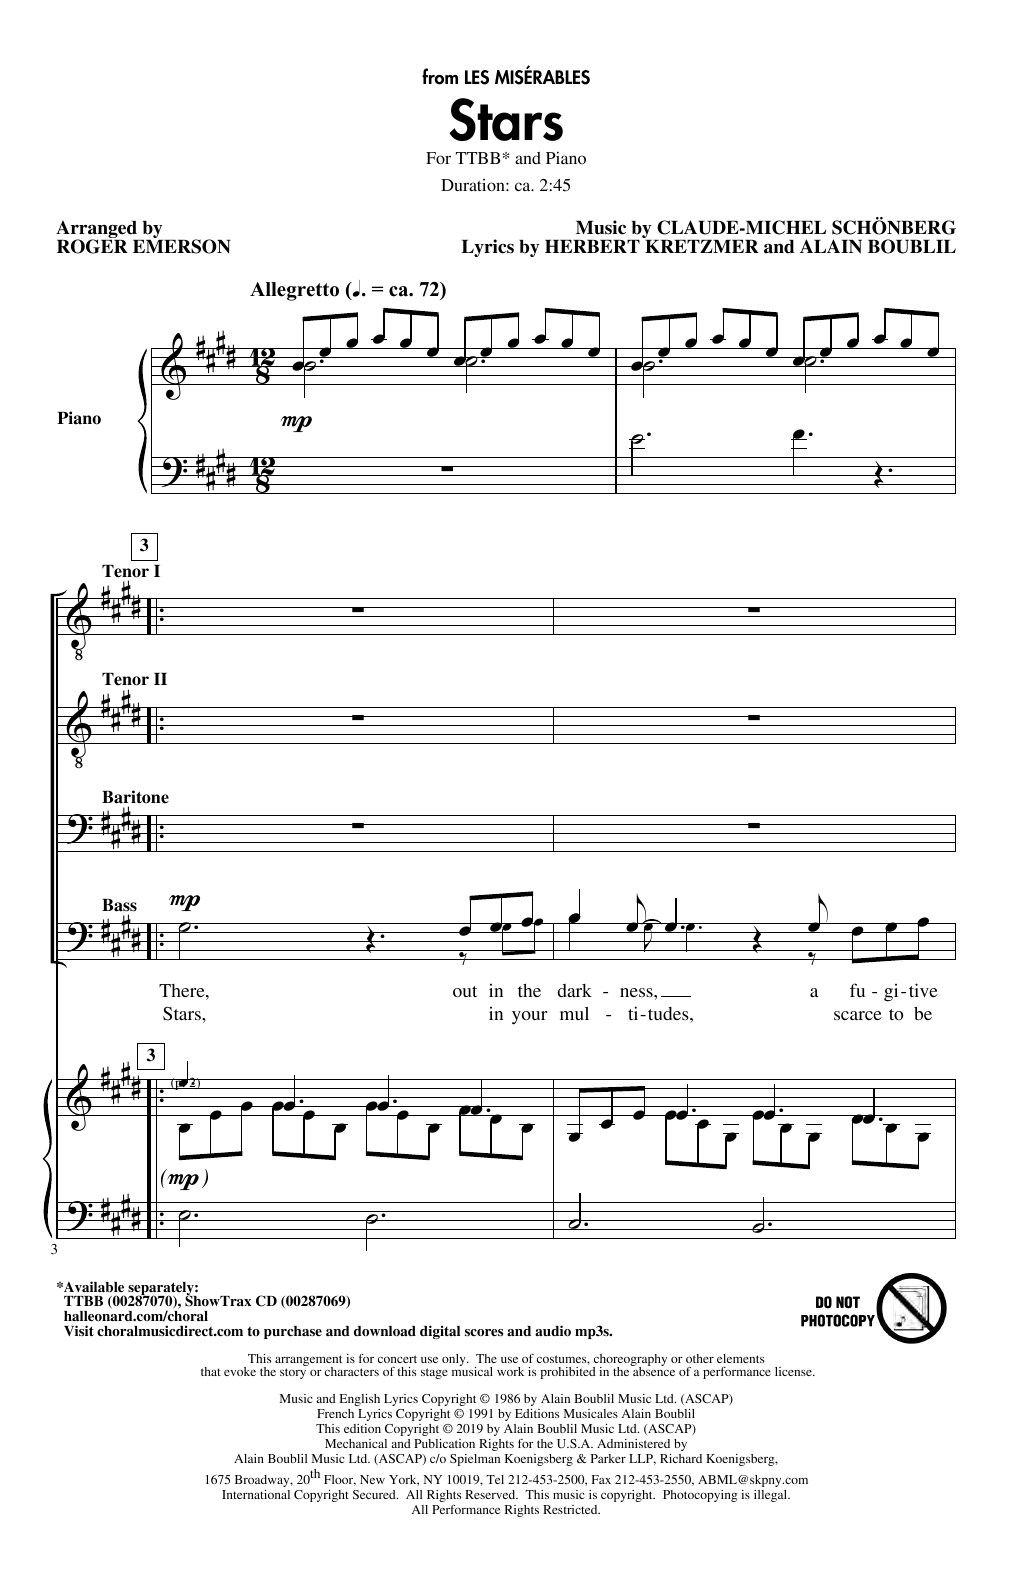 Boublil & Schonberg Stars (from Les Miserables) (arr. Roger Emerson) sheet music notes and chords arranged for TTBB Choir